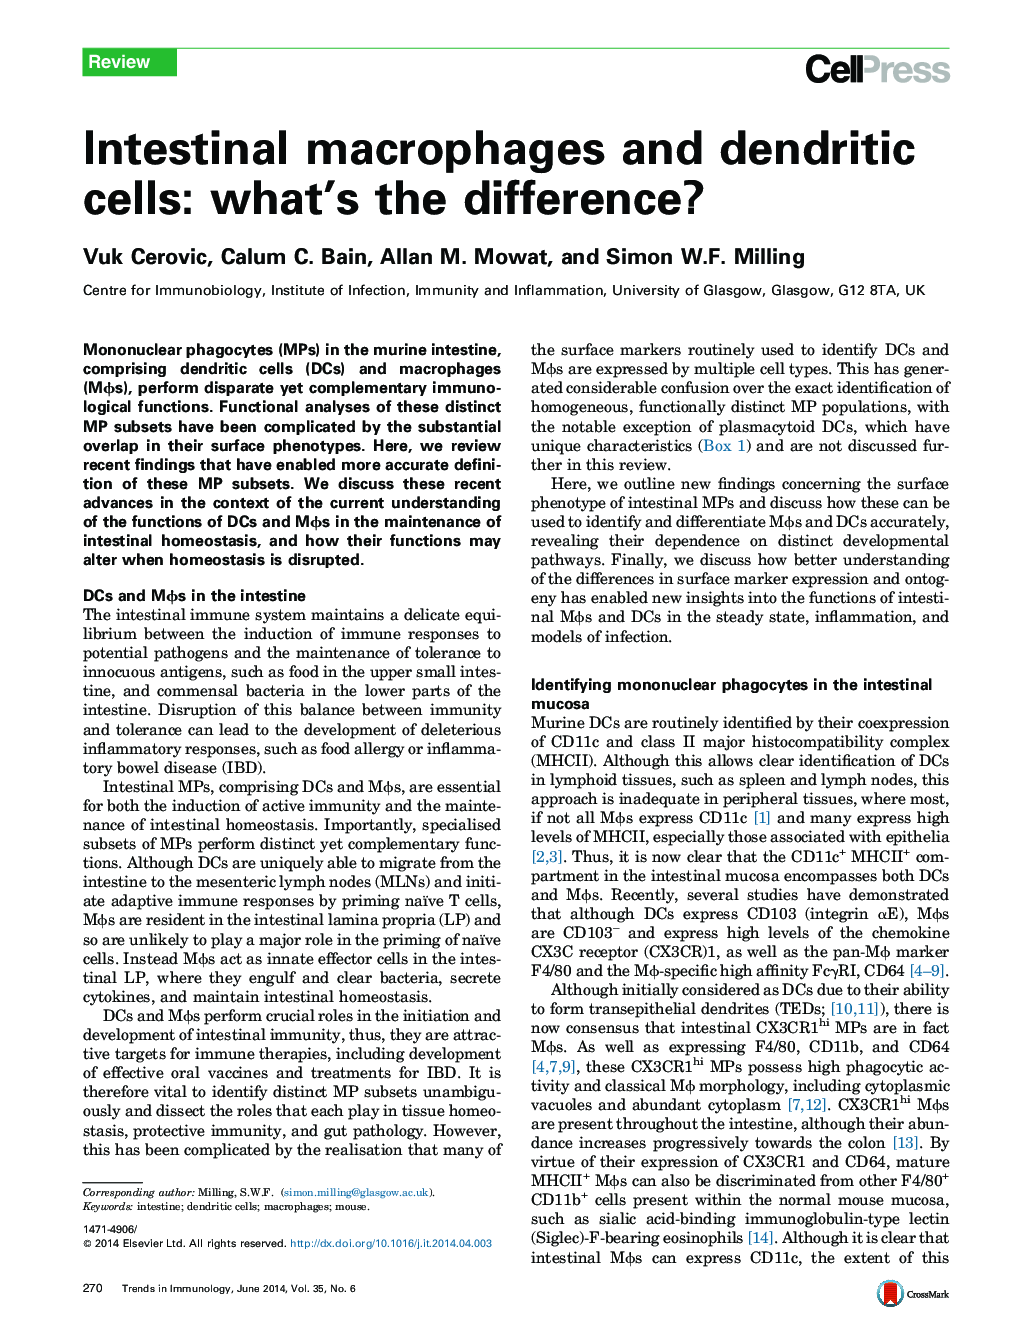 ماکروفاژ روده و سلول های دندریتیک: تفاوت چیست؟ 